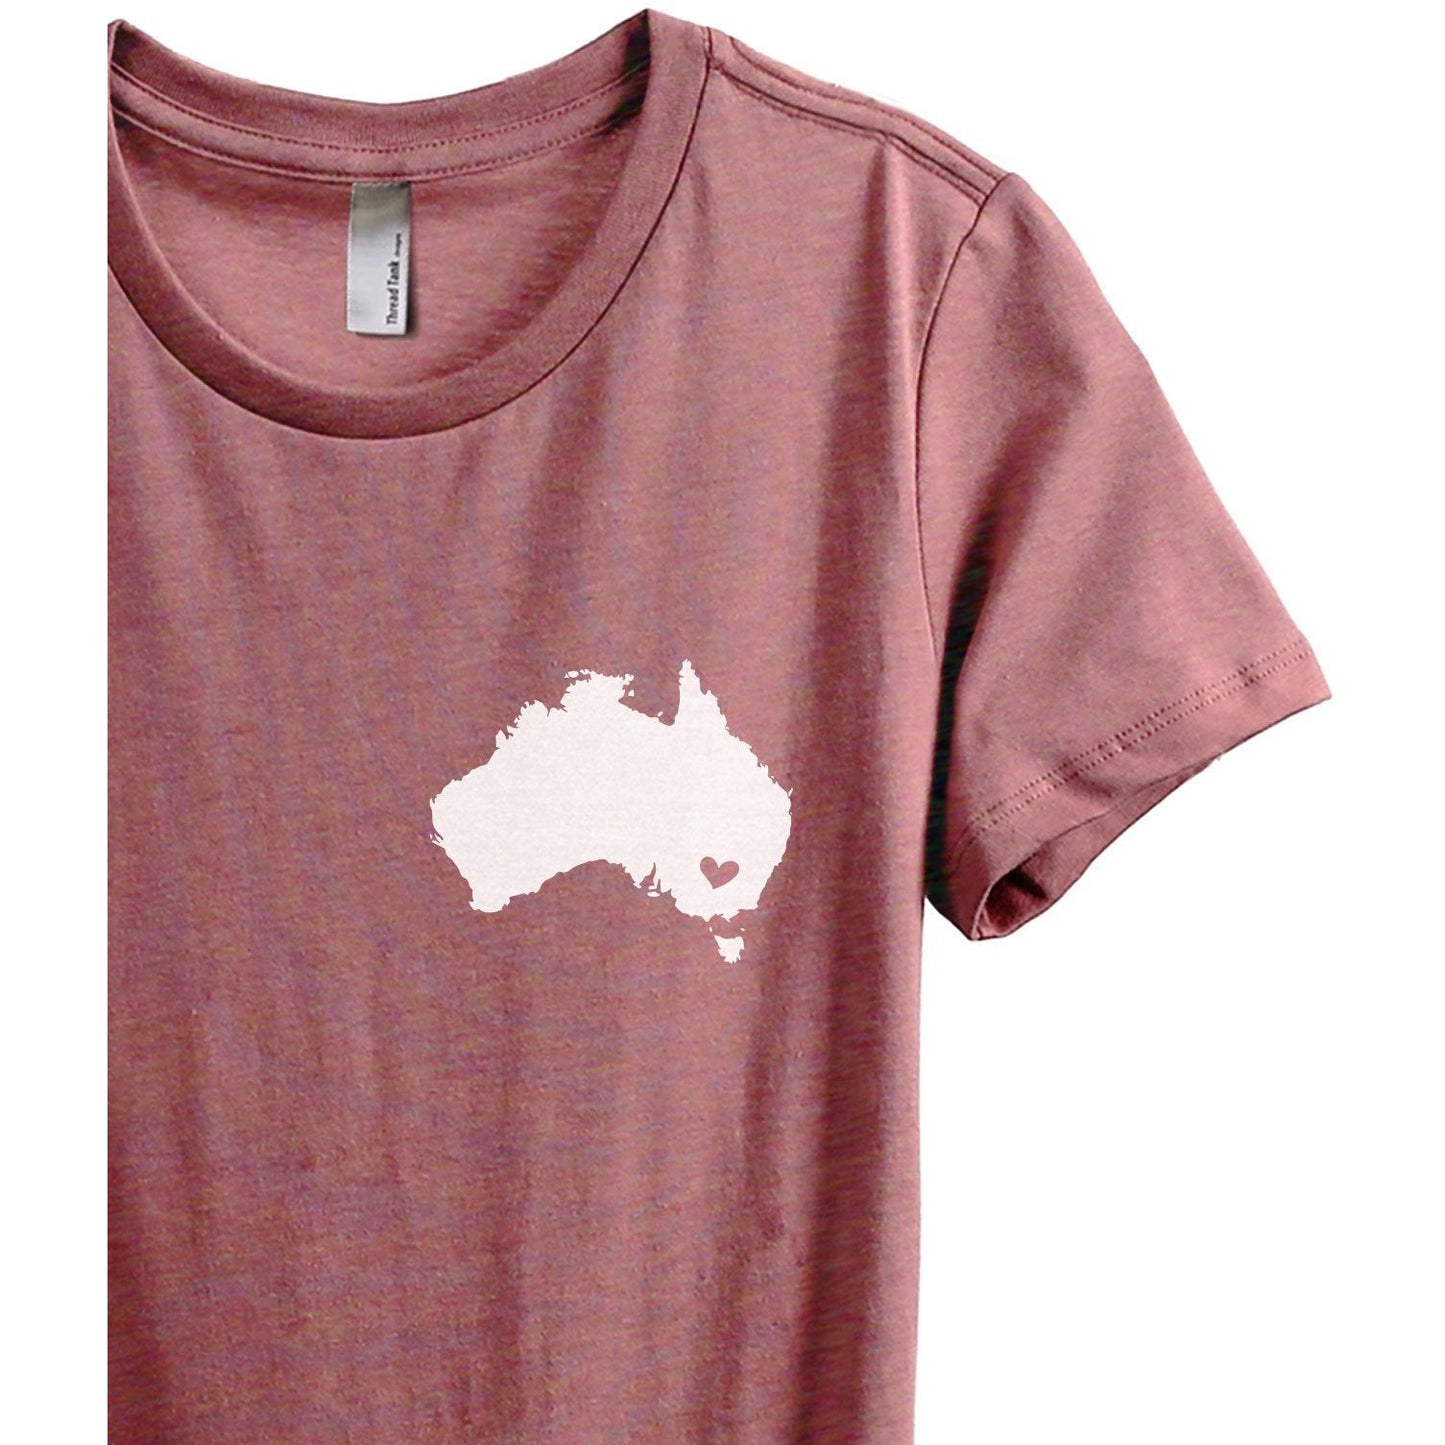 Australia Heart Women's Relaxed Crewneck T-Shirt Top Tee Heather Rouge Zoom Details
